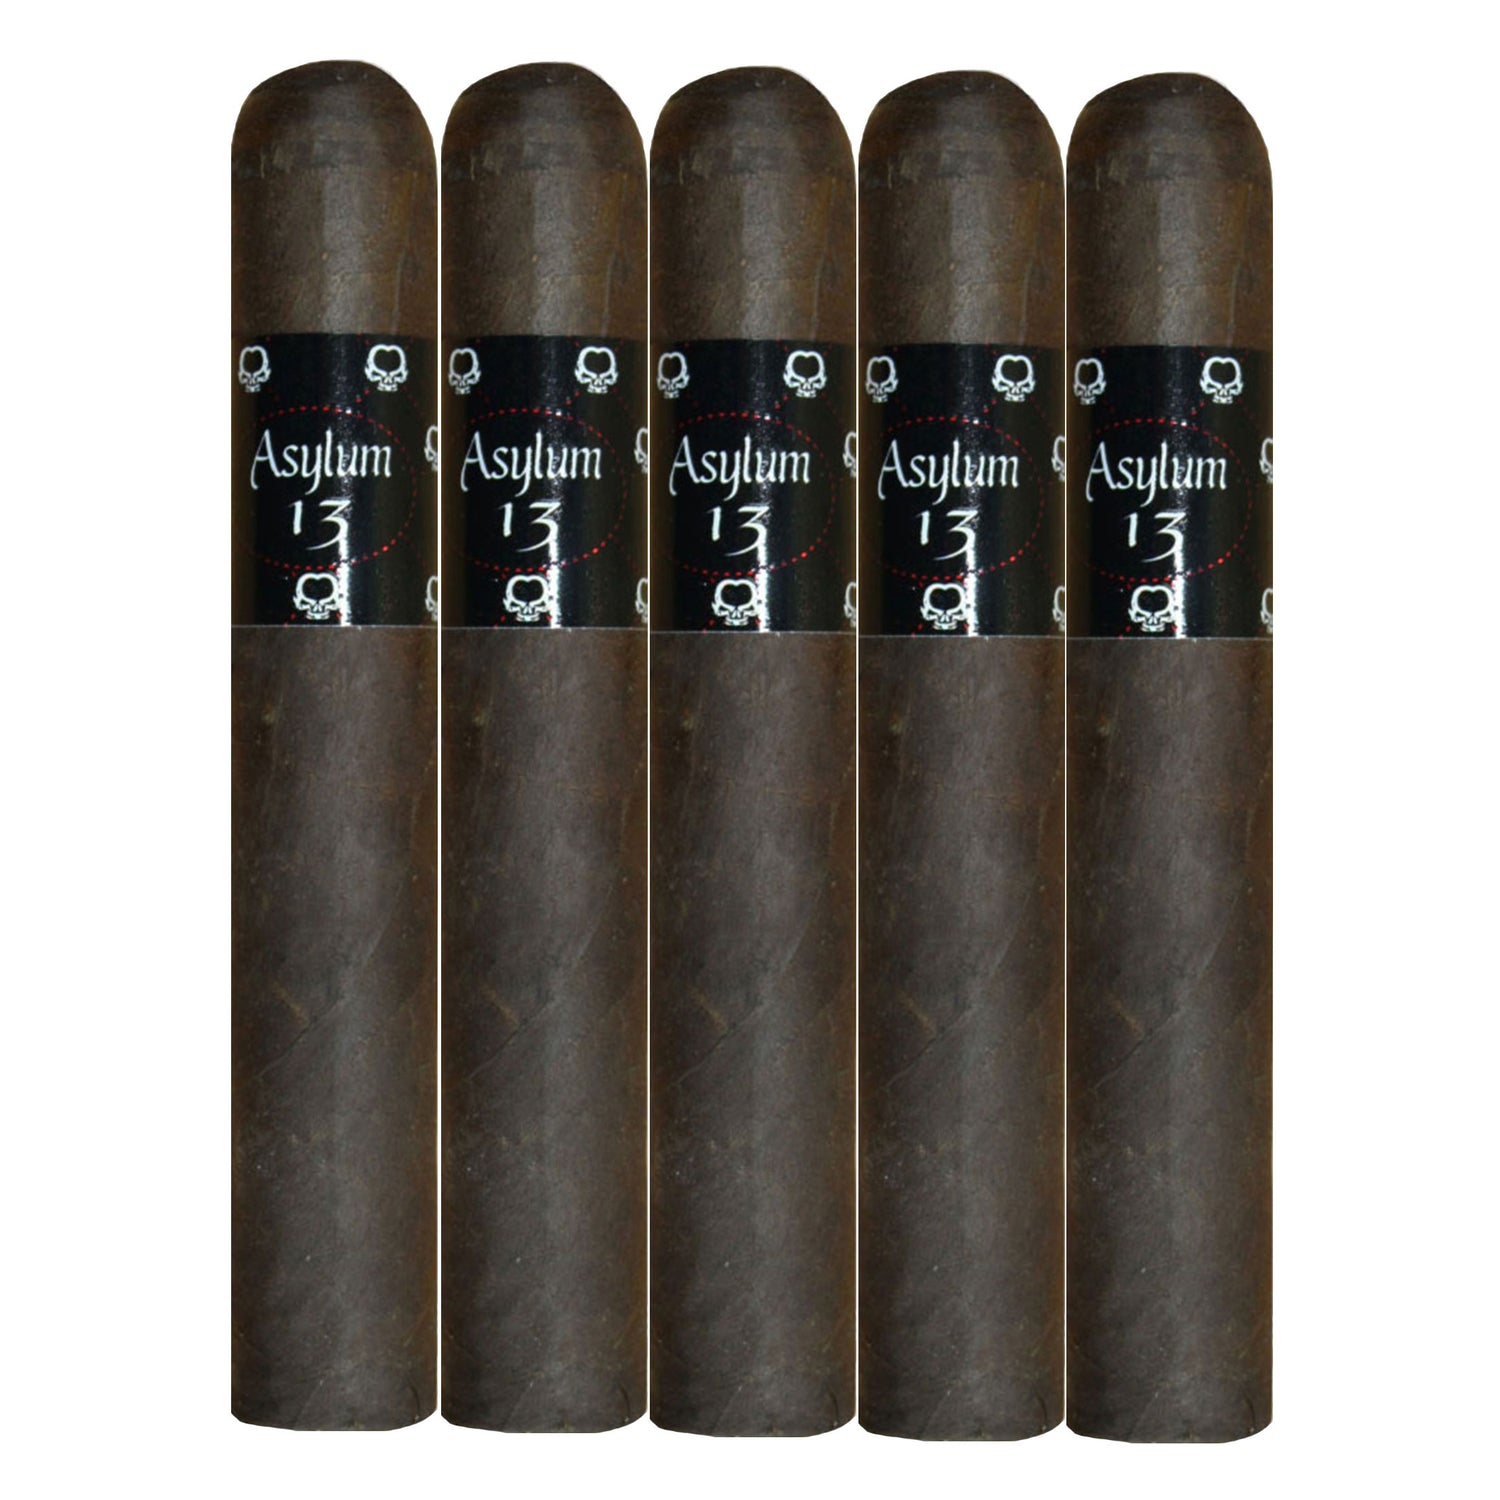 Asylum 13 Maduro Robusto Cigars 5 Pack